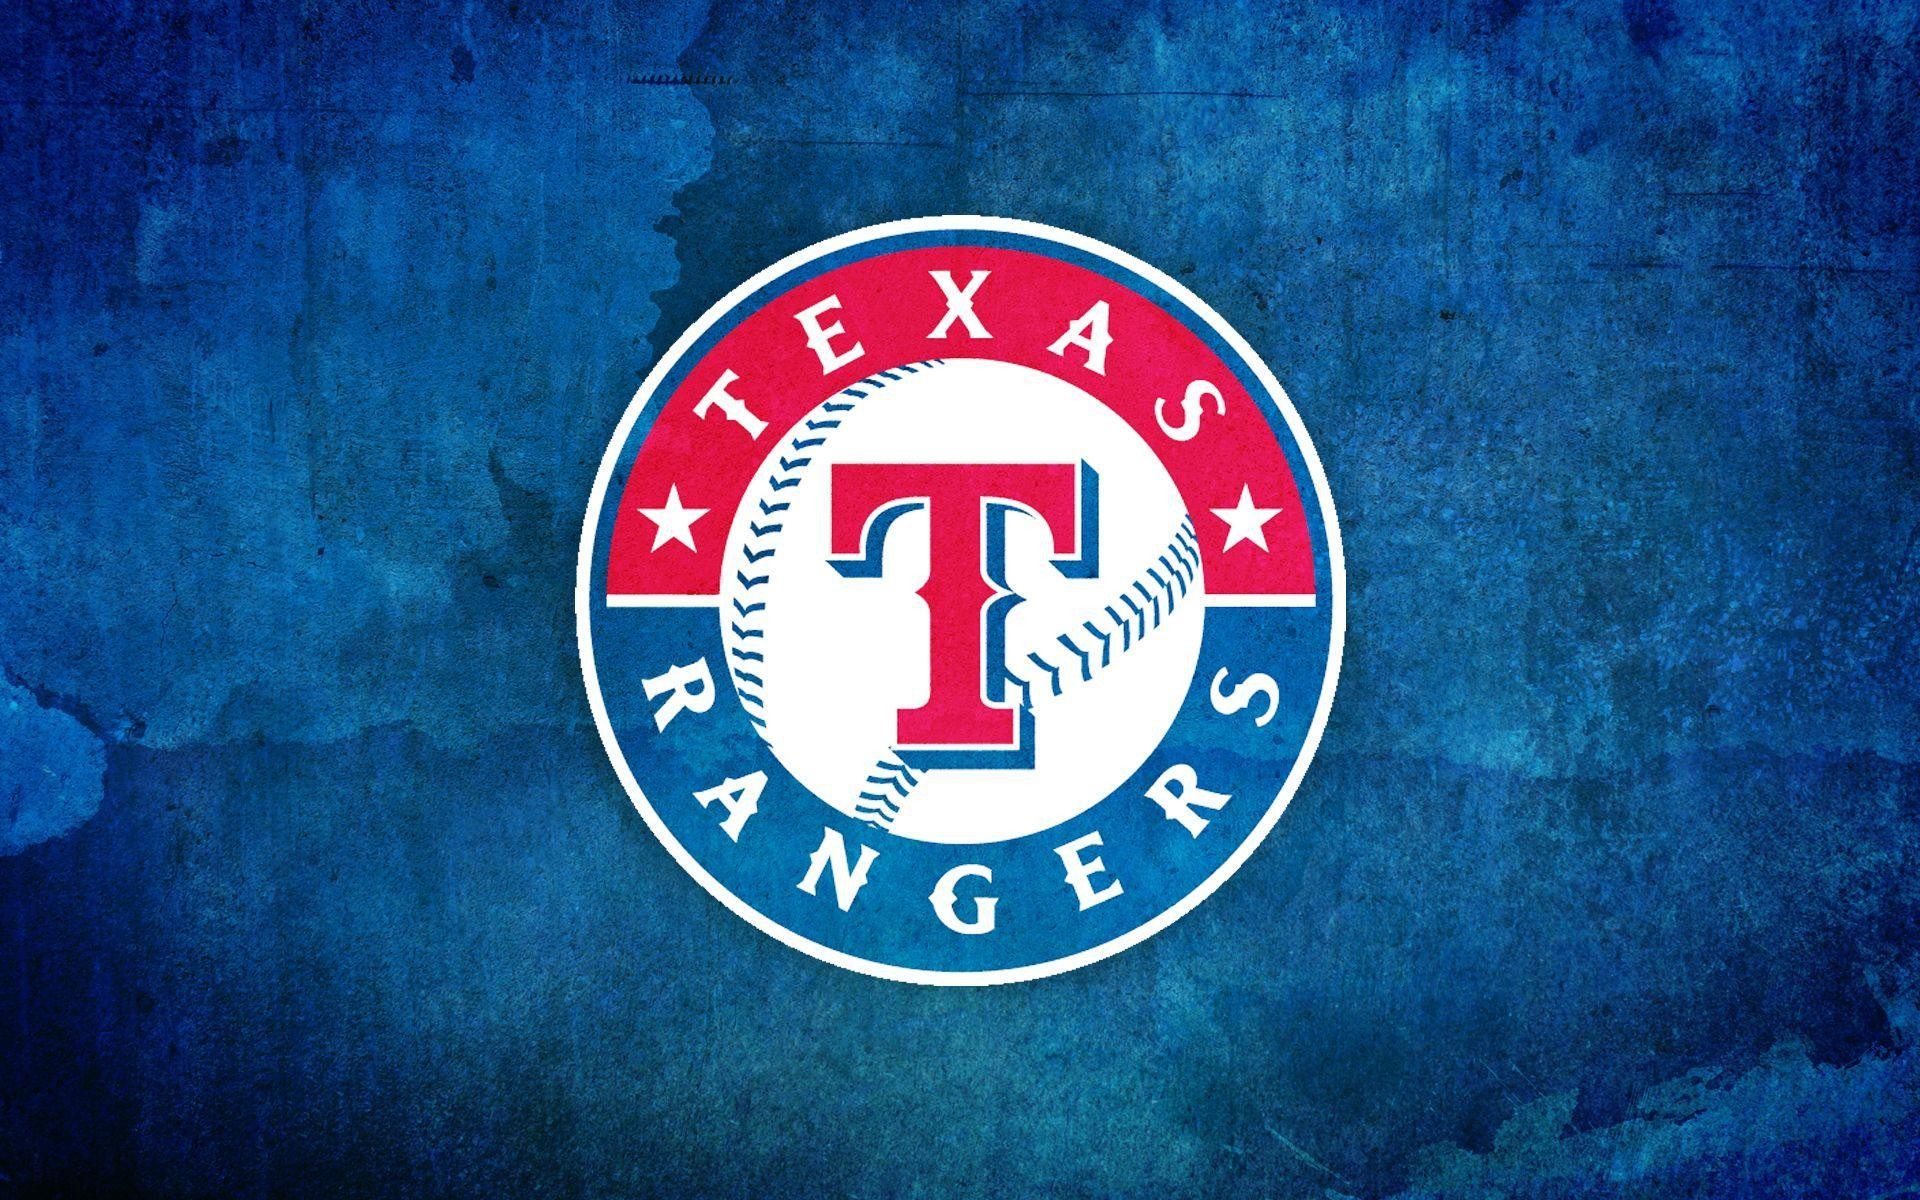 1920x1200 Texas Rangers Wallpapers HD | PixelsTalk.Net